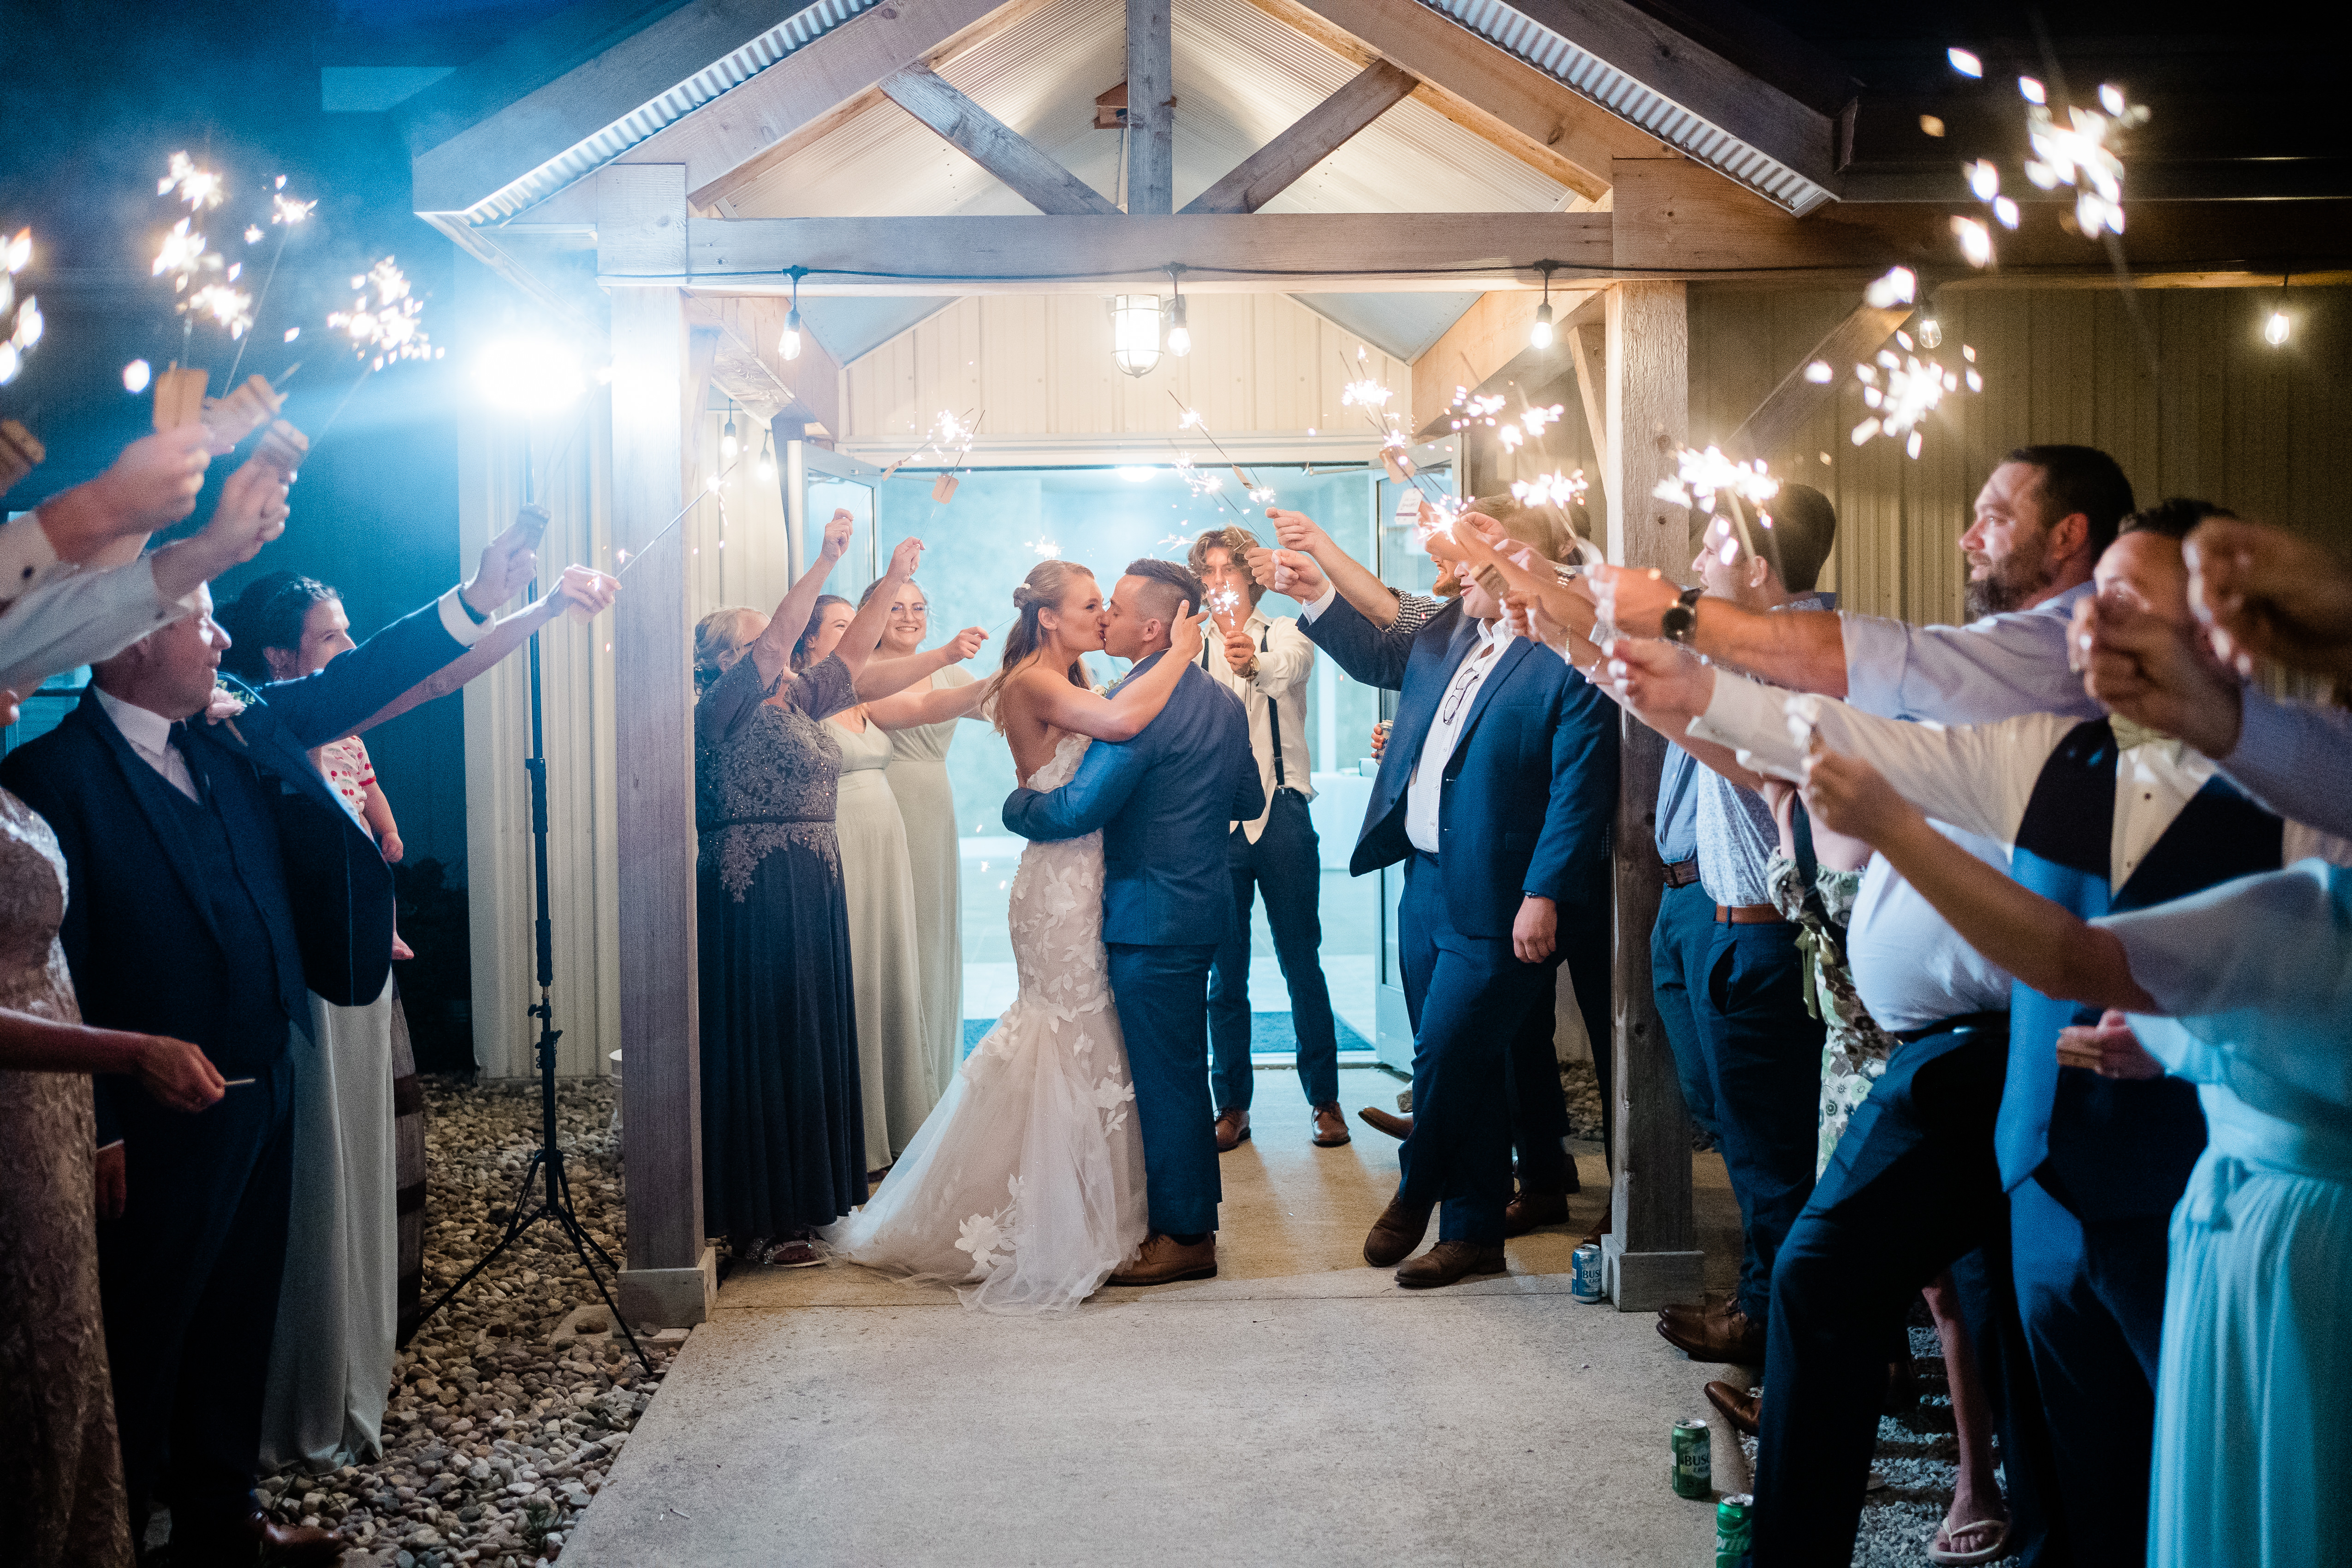 Fort wayne wedding photographers capture bride and groom kissing before sparkler wedding send off